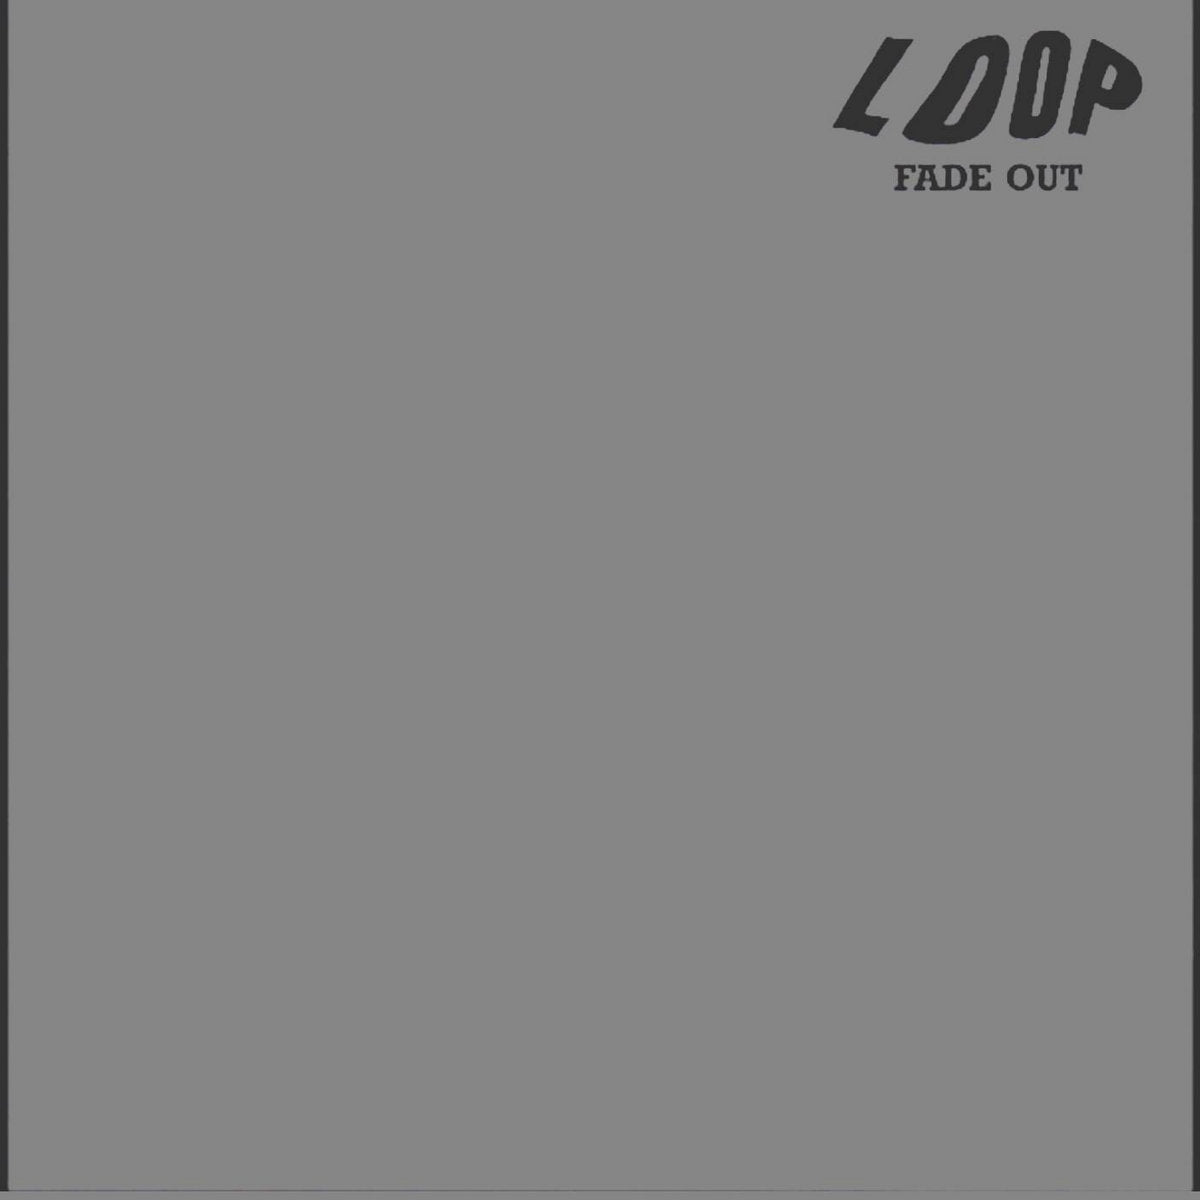 Arcade Sound - Loop - Fade Out - 2xLP / 2xCD image